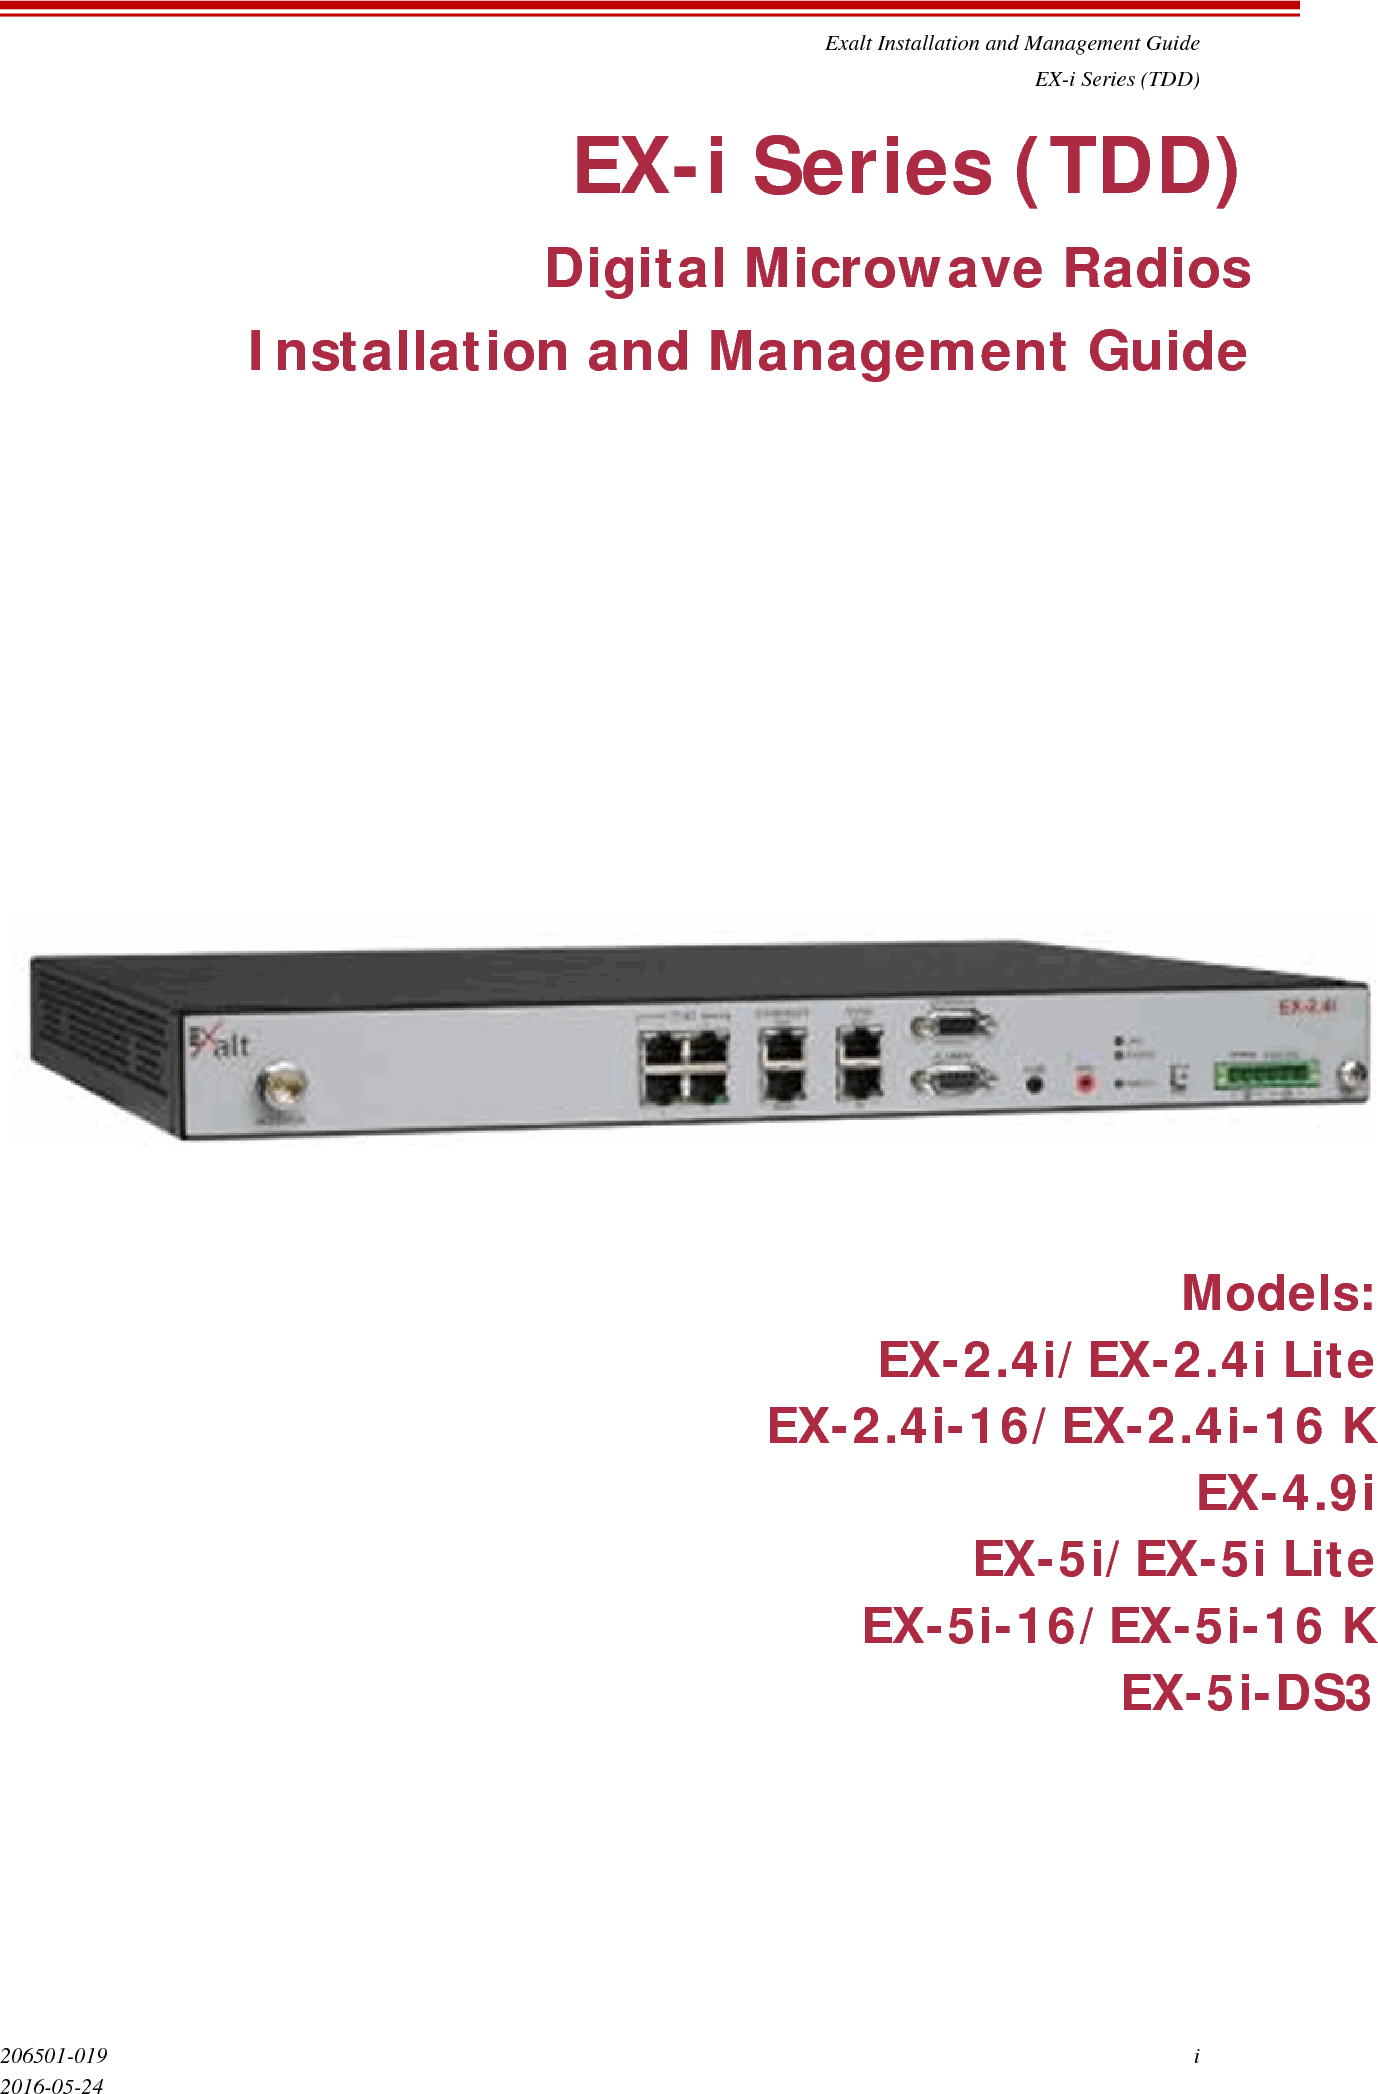 Exalt Installation and Management GuideEX-i Series (TDD)206501-019 i2016-05-24EX-i Series (TDD)Digital Microwave RadiosInstallation and Management GuideModels:EX-2.4i/EX-2.4i LiteEX-2.4i-16/EX-2.4i-16 KEX-4.9iEX-5i/EX-5i LiteEX-5i-16/EX-5i-16 KEX-5i-DS3